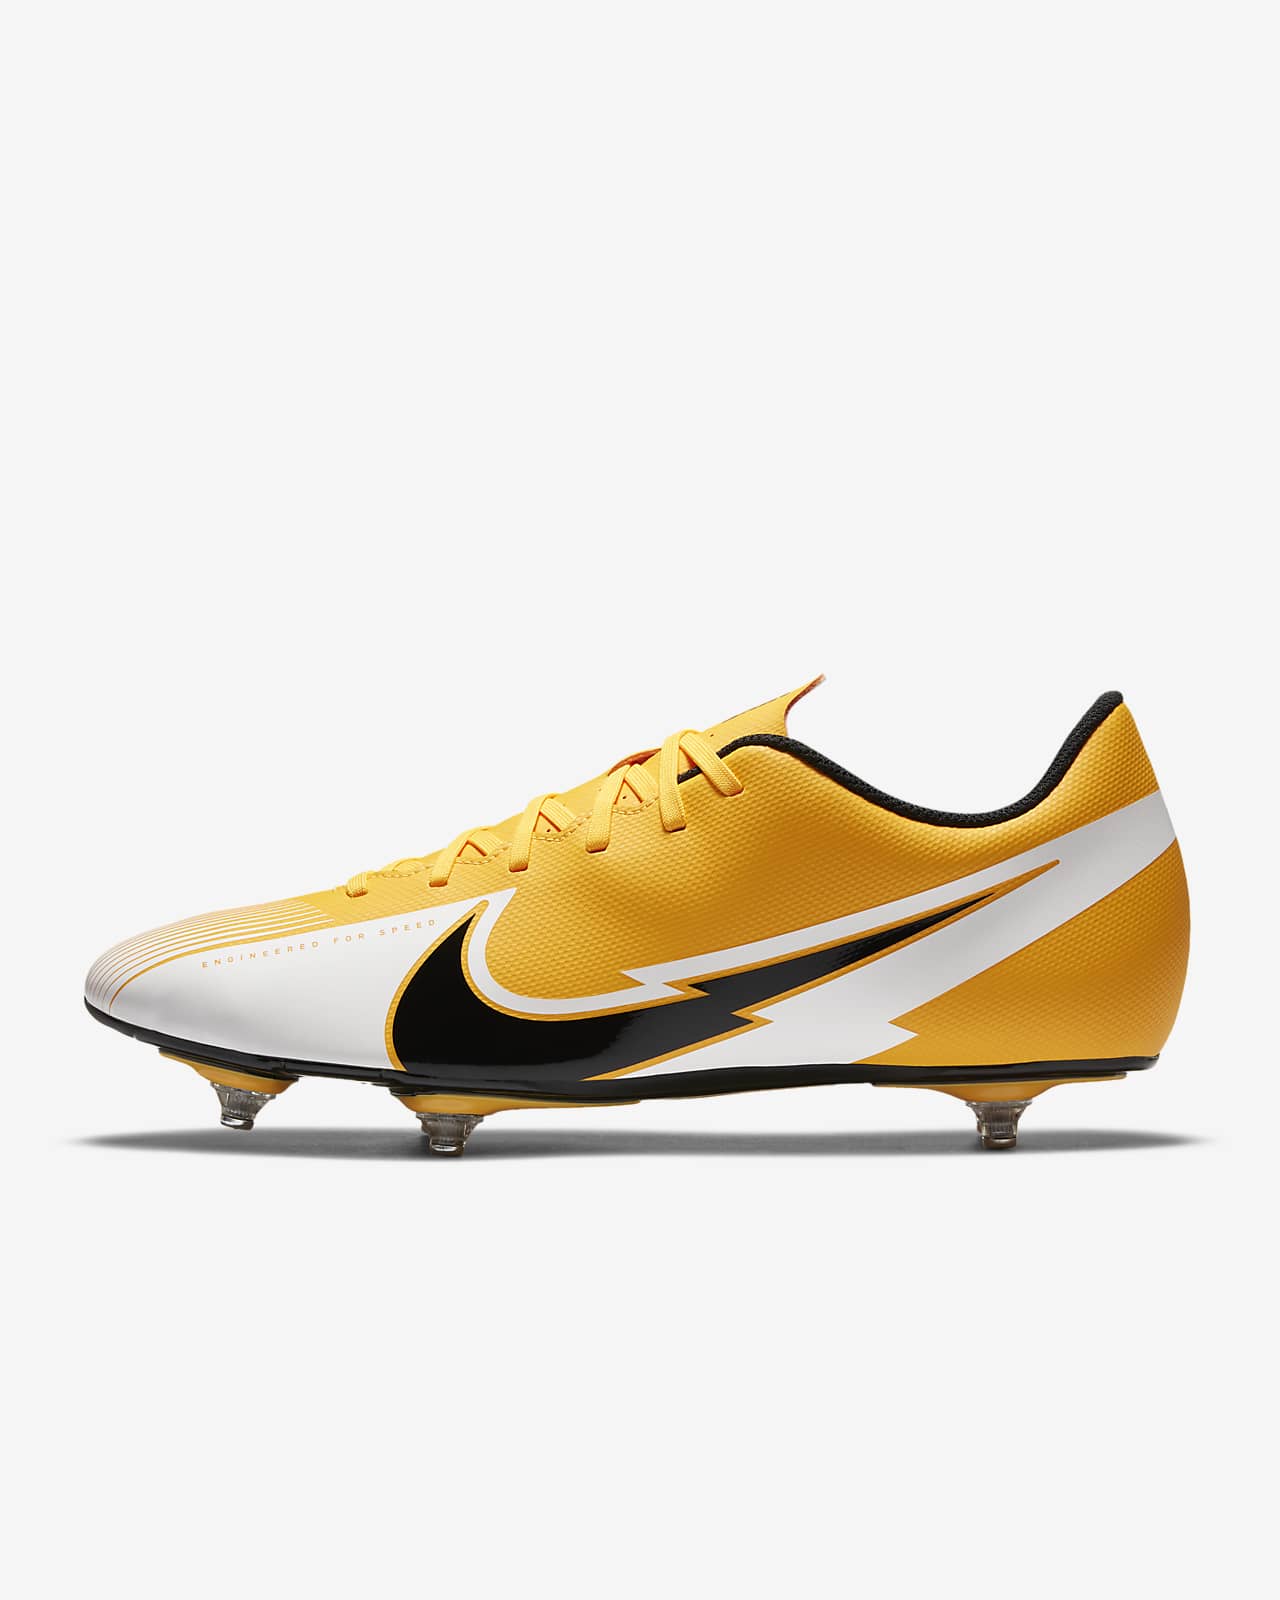 nike mercurial football boots yellow